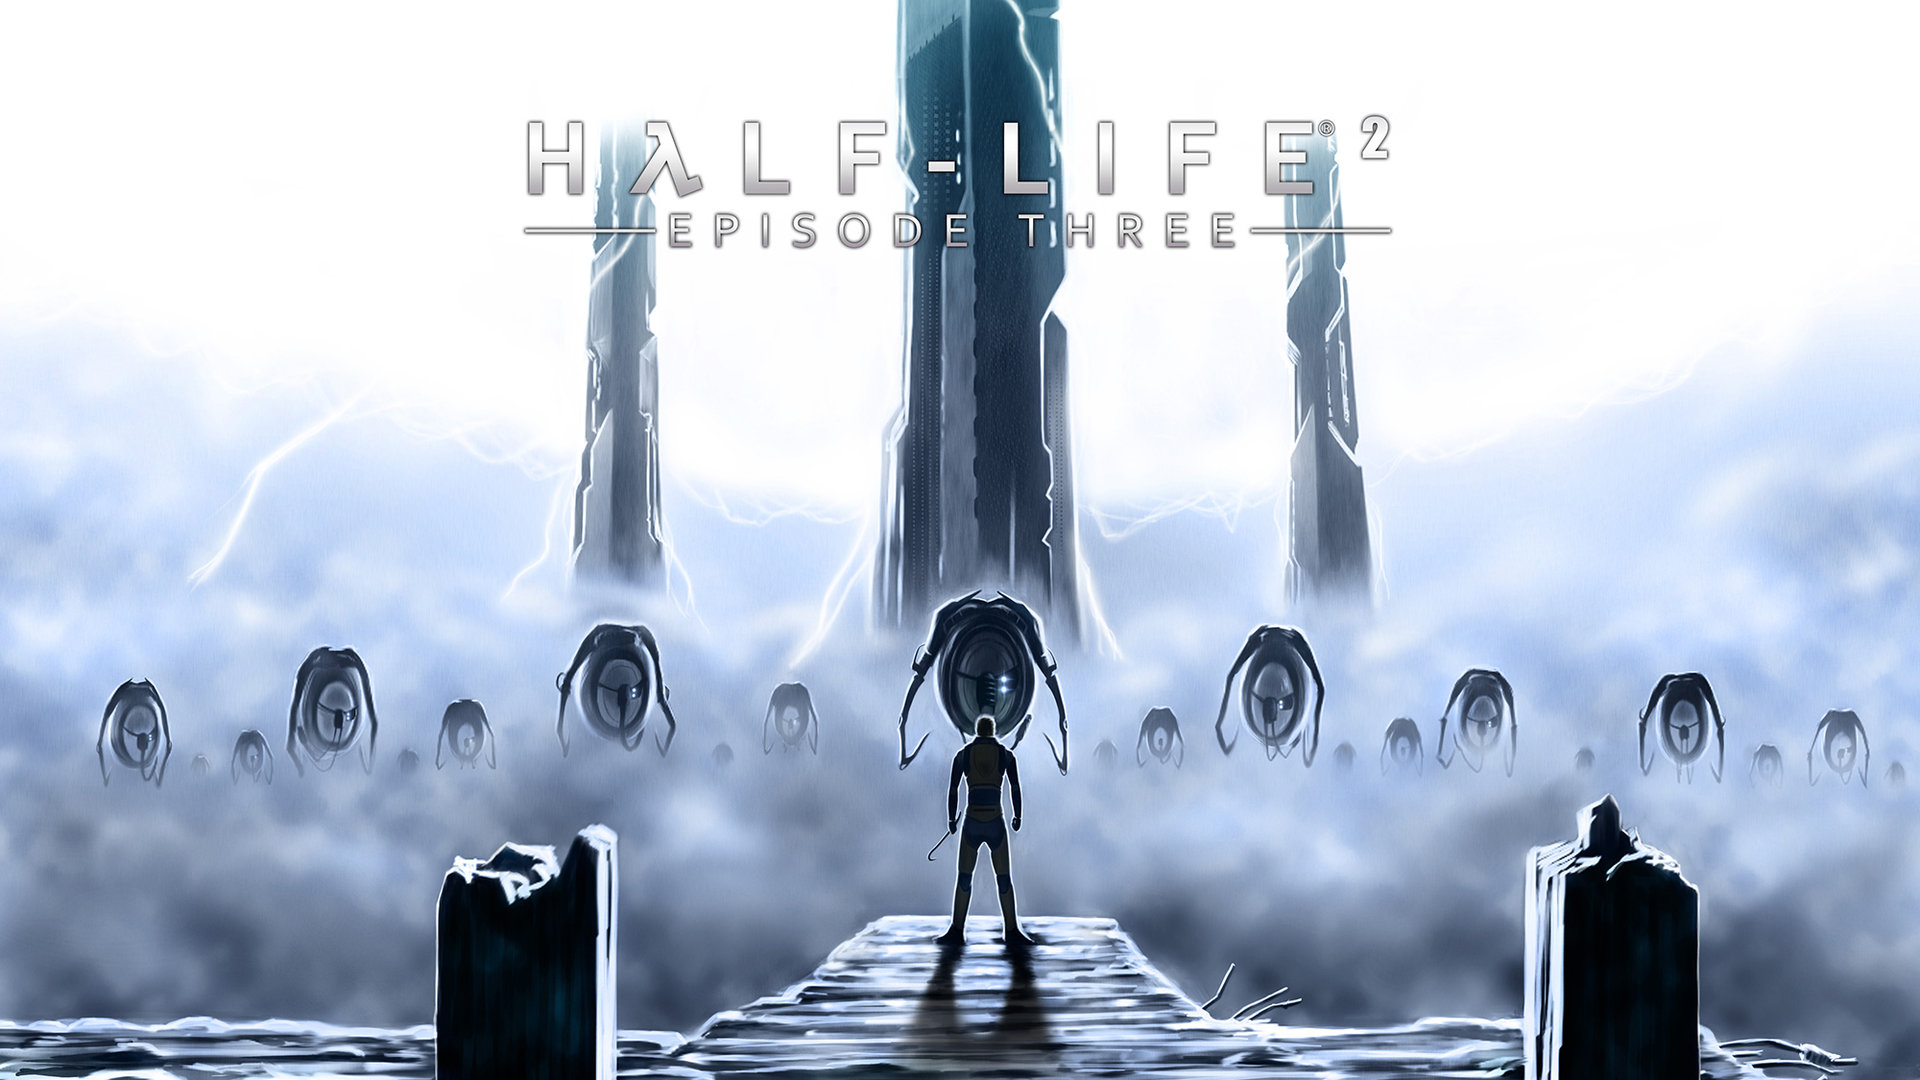 Best Half-Life 2 wallpaper ID:24333 for High Resolution hd 1080p computer